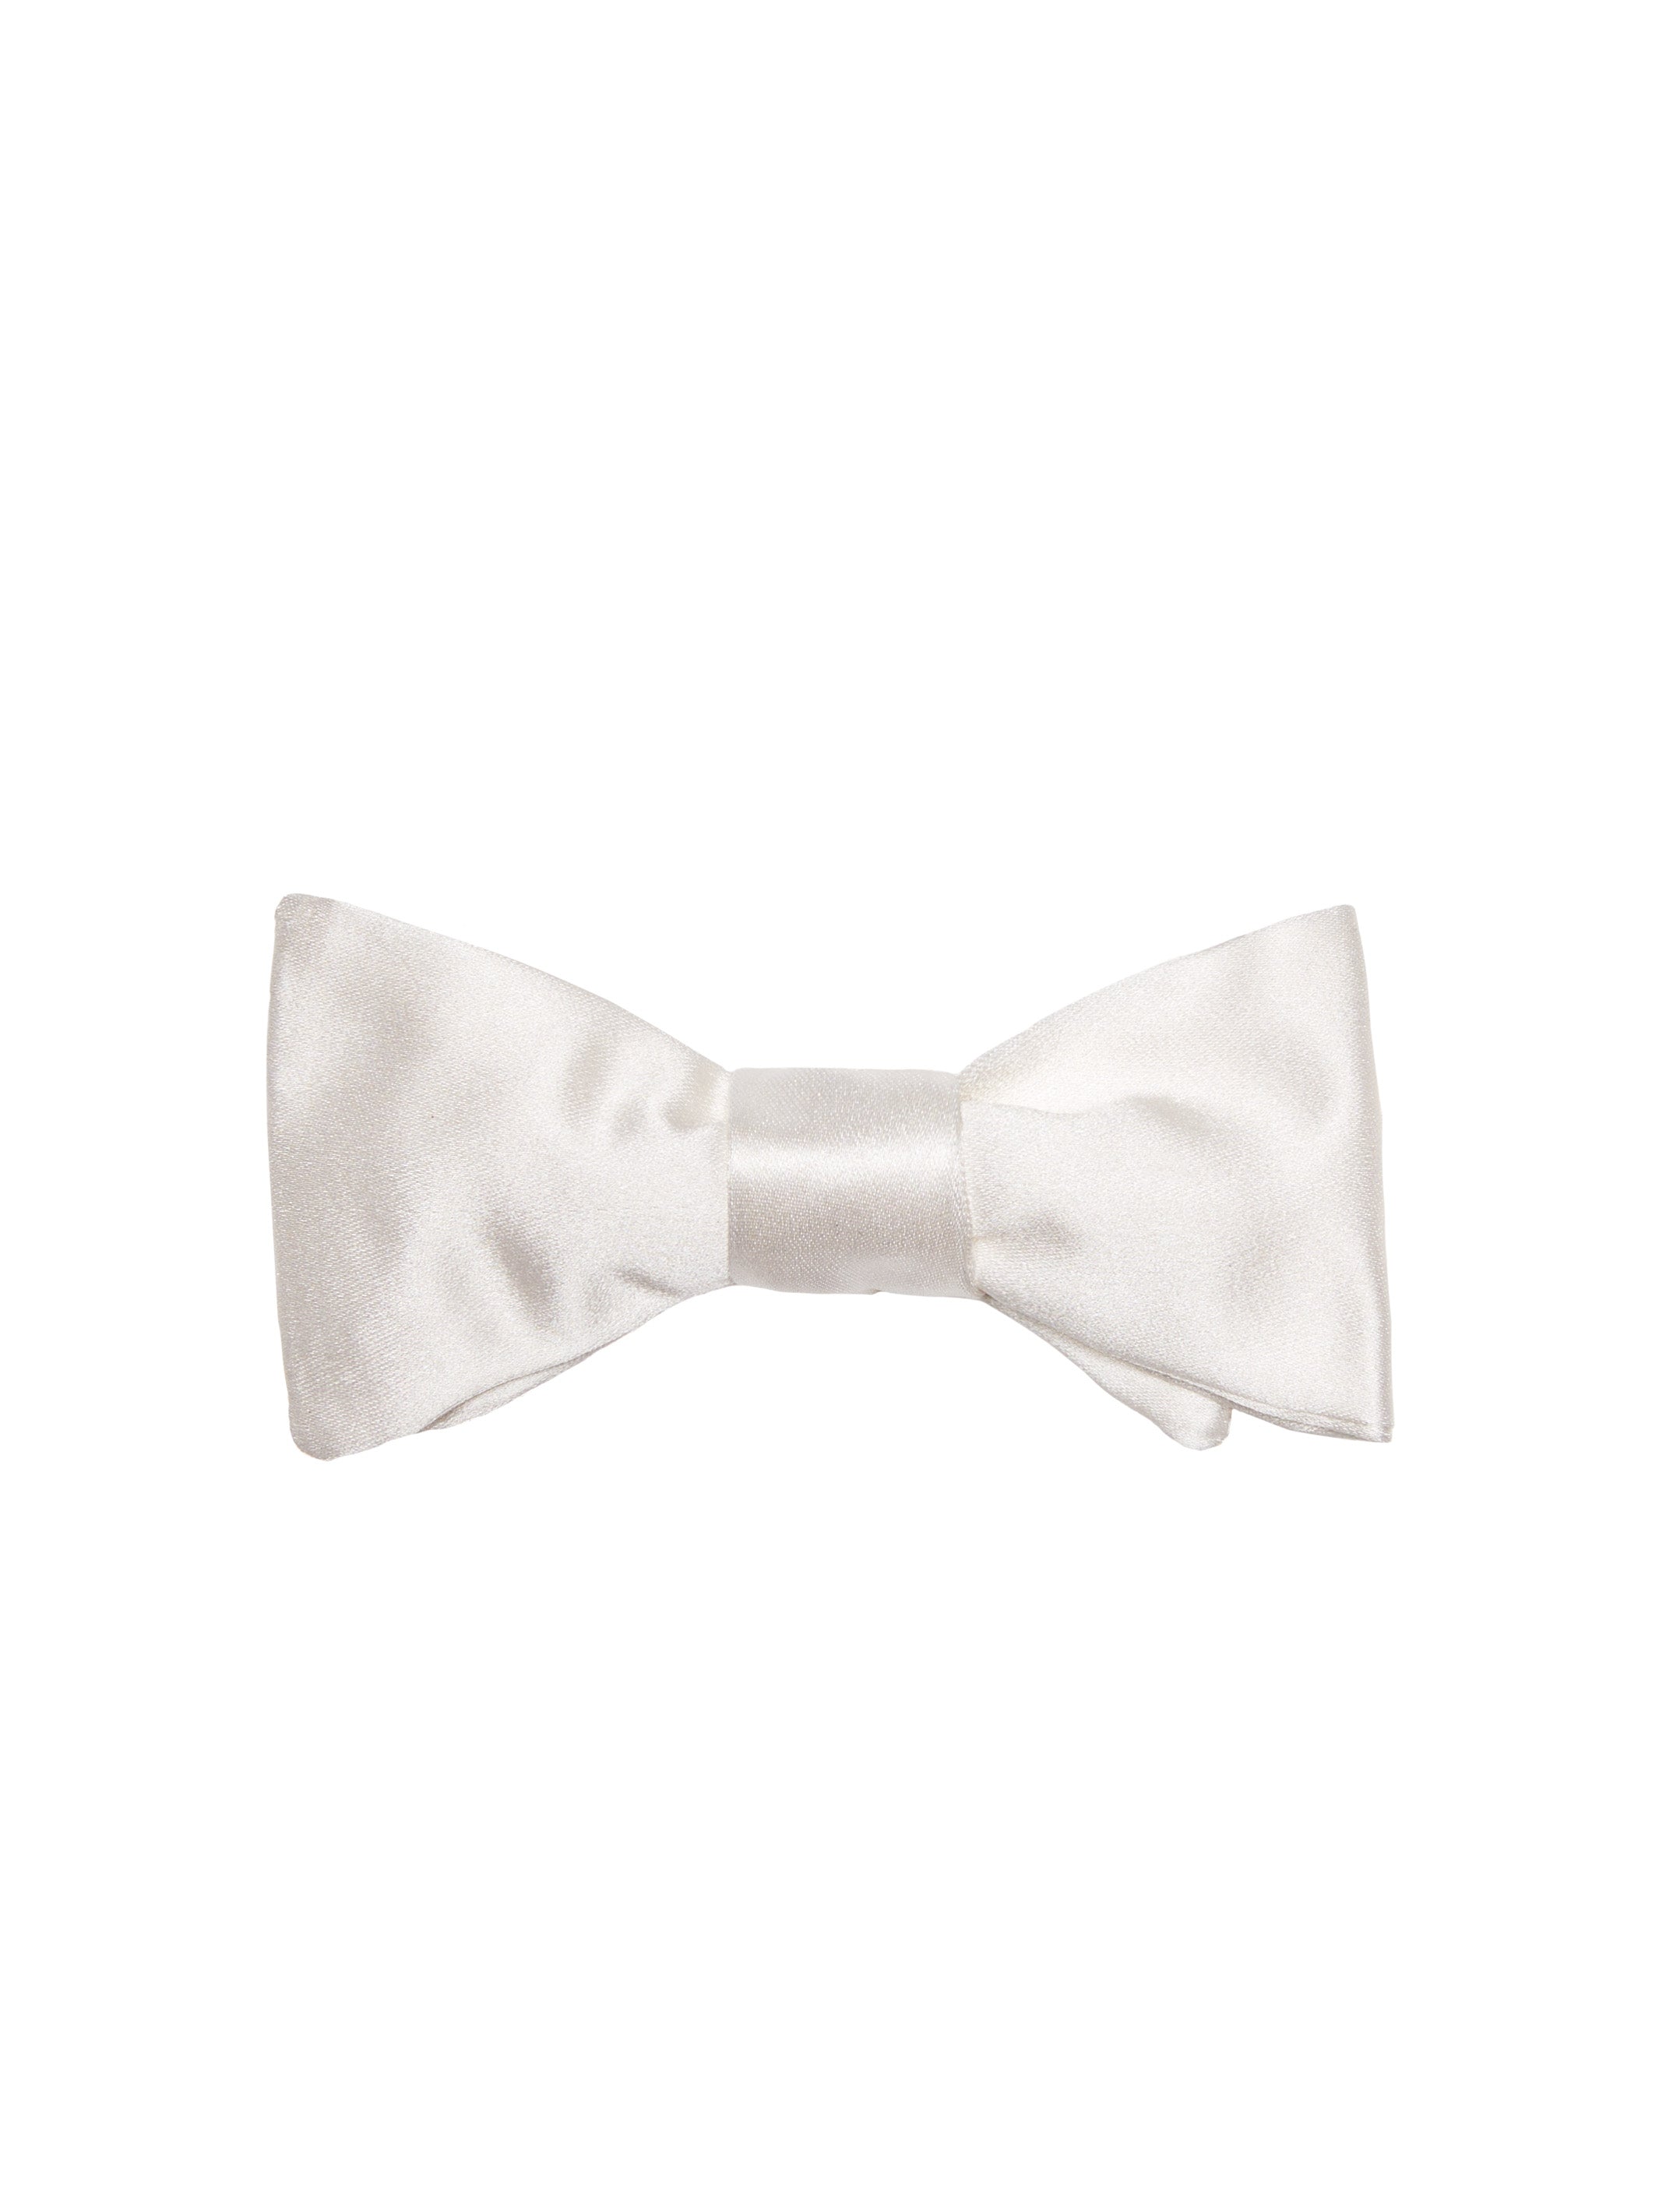 White natural silk bow tie